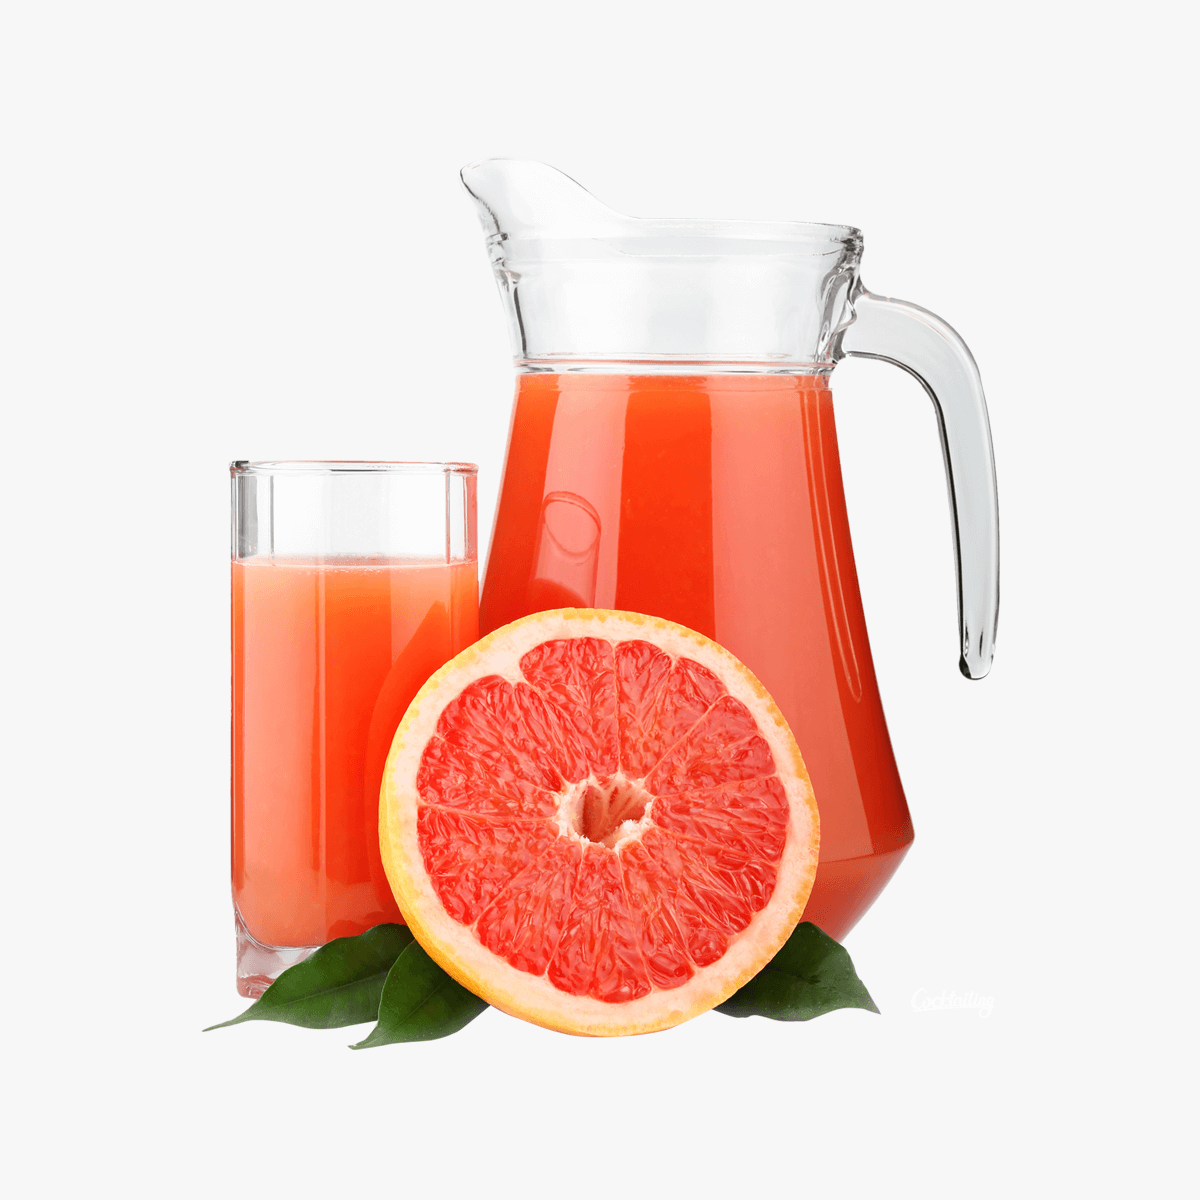 vanilla vodka and grapefruit juice